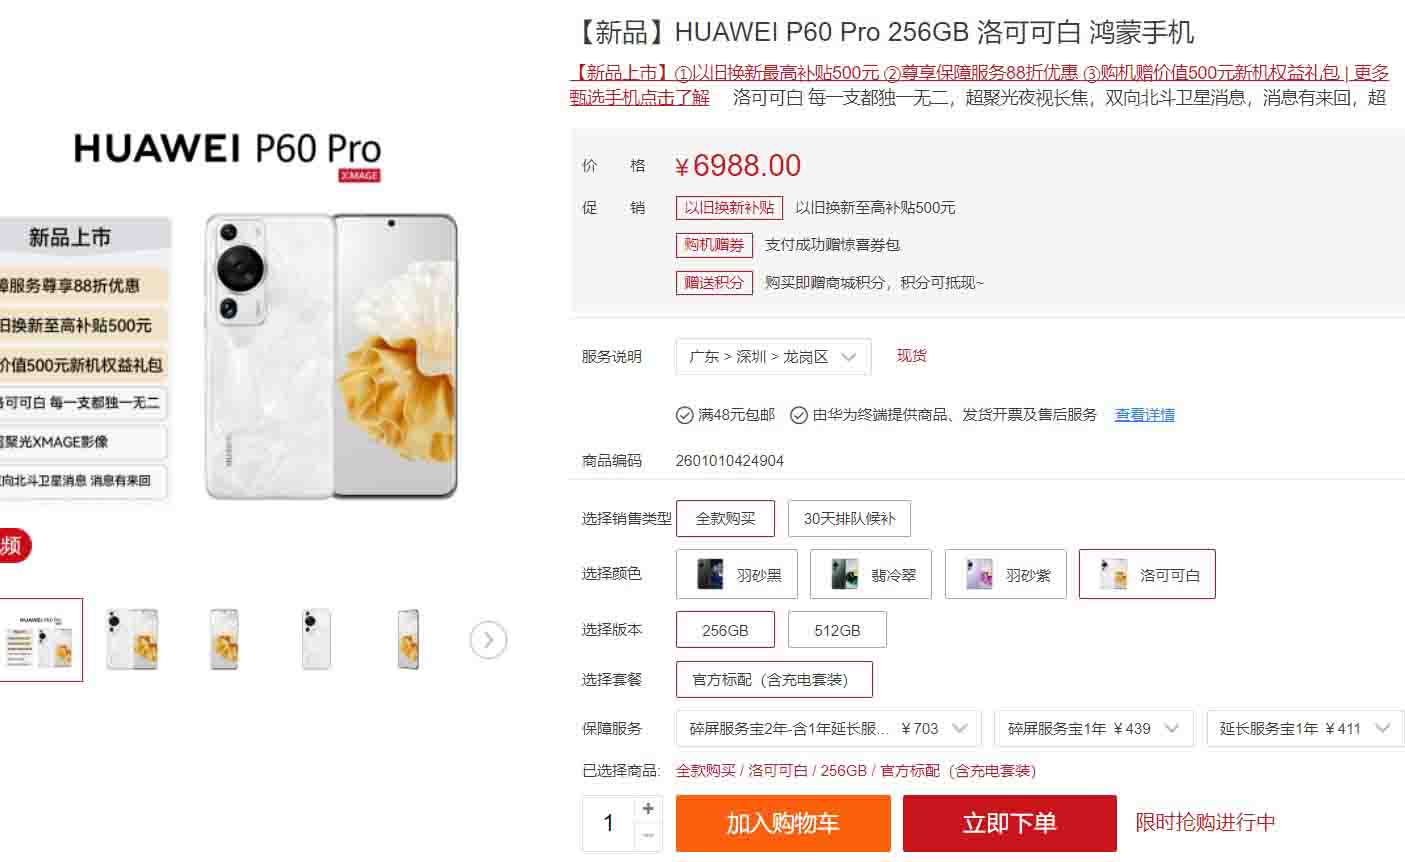 Huawei P60 Series sales page